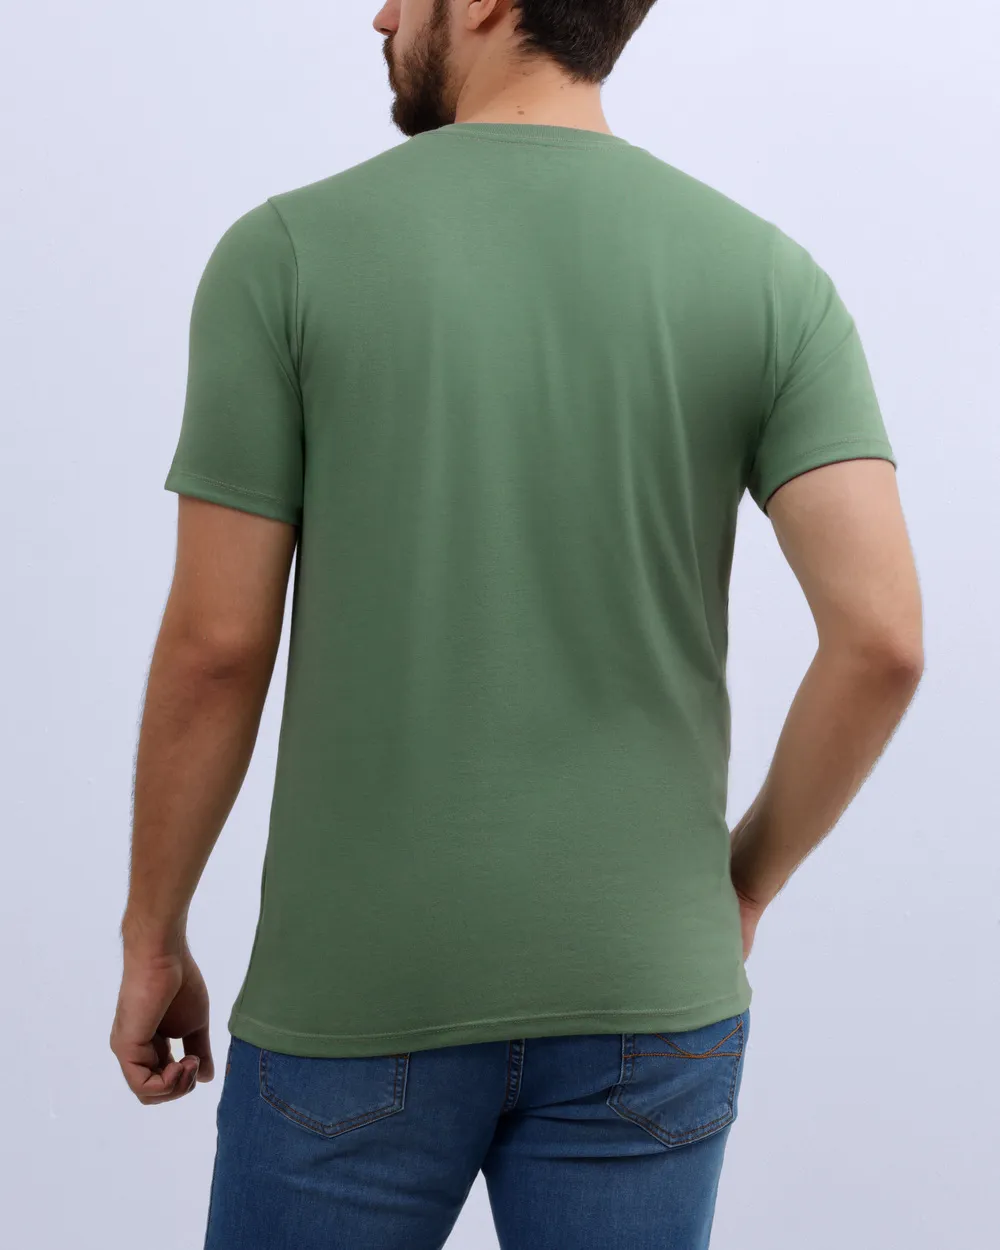 Camiseta cuello v lisa manga corta color verde